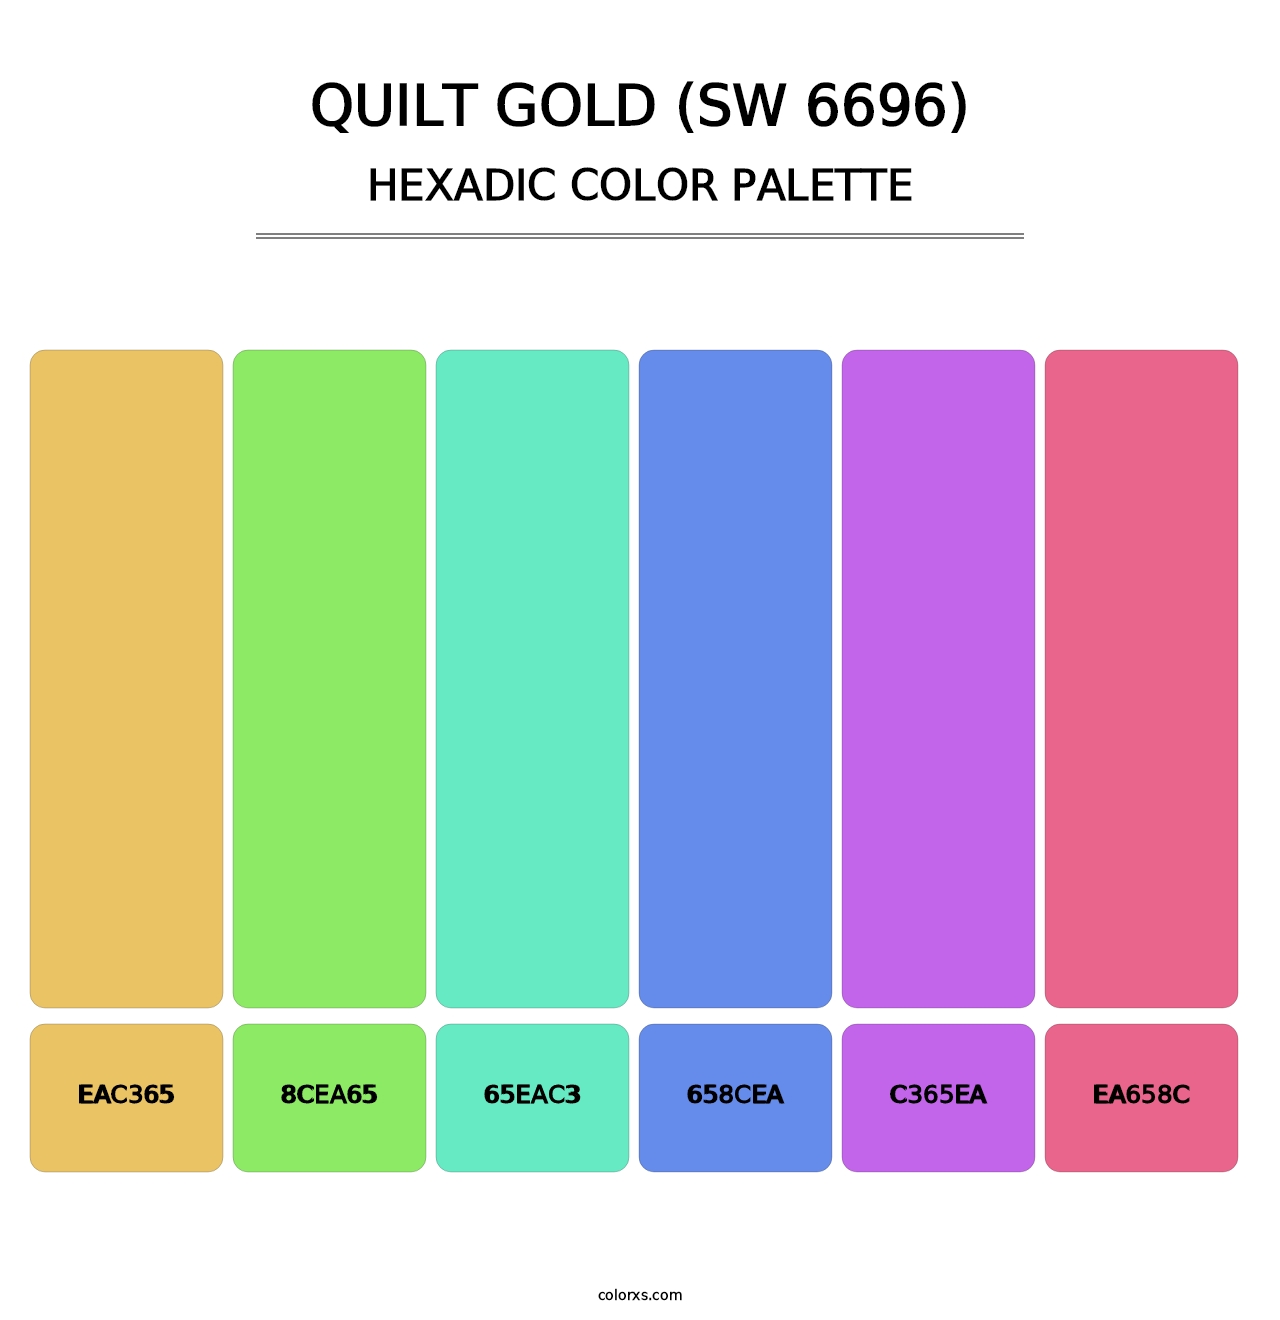 Quilt Gold (SW 6696) - Hexadic Color Palette